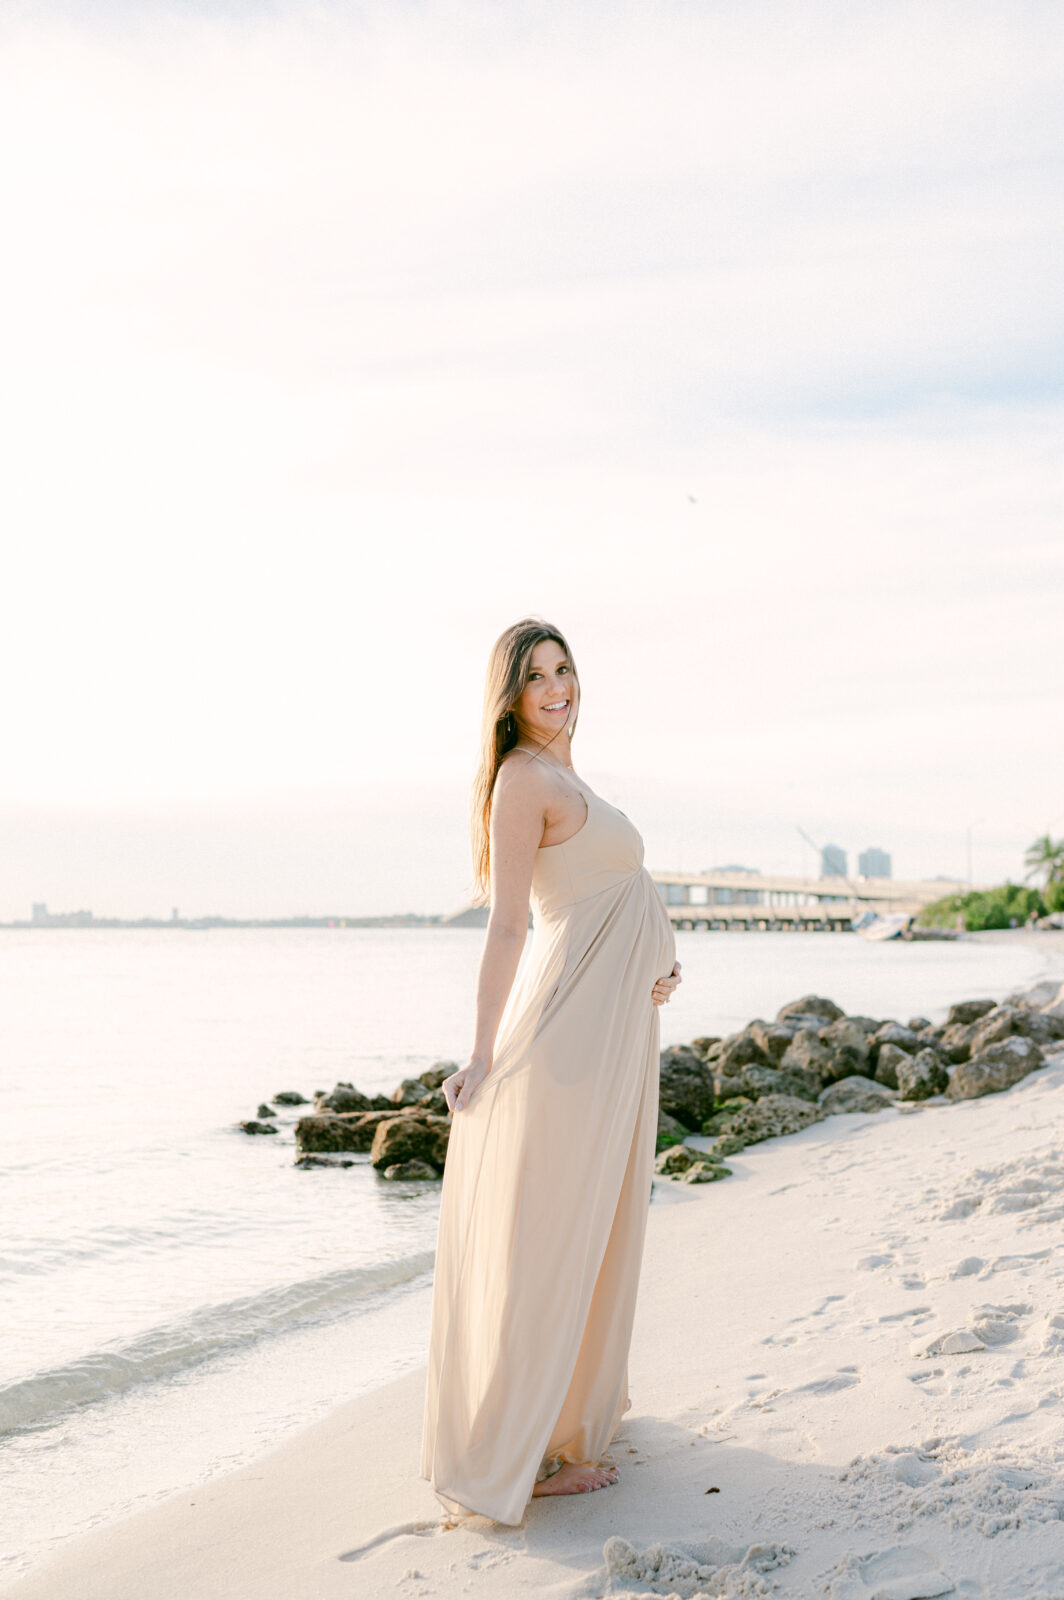 Maternity photos in Miami